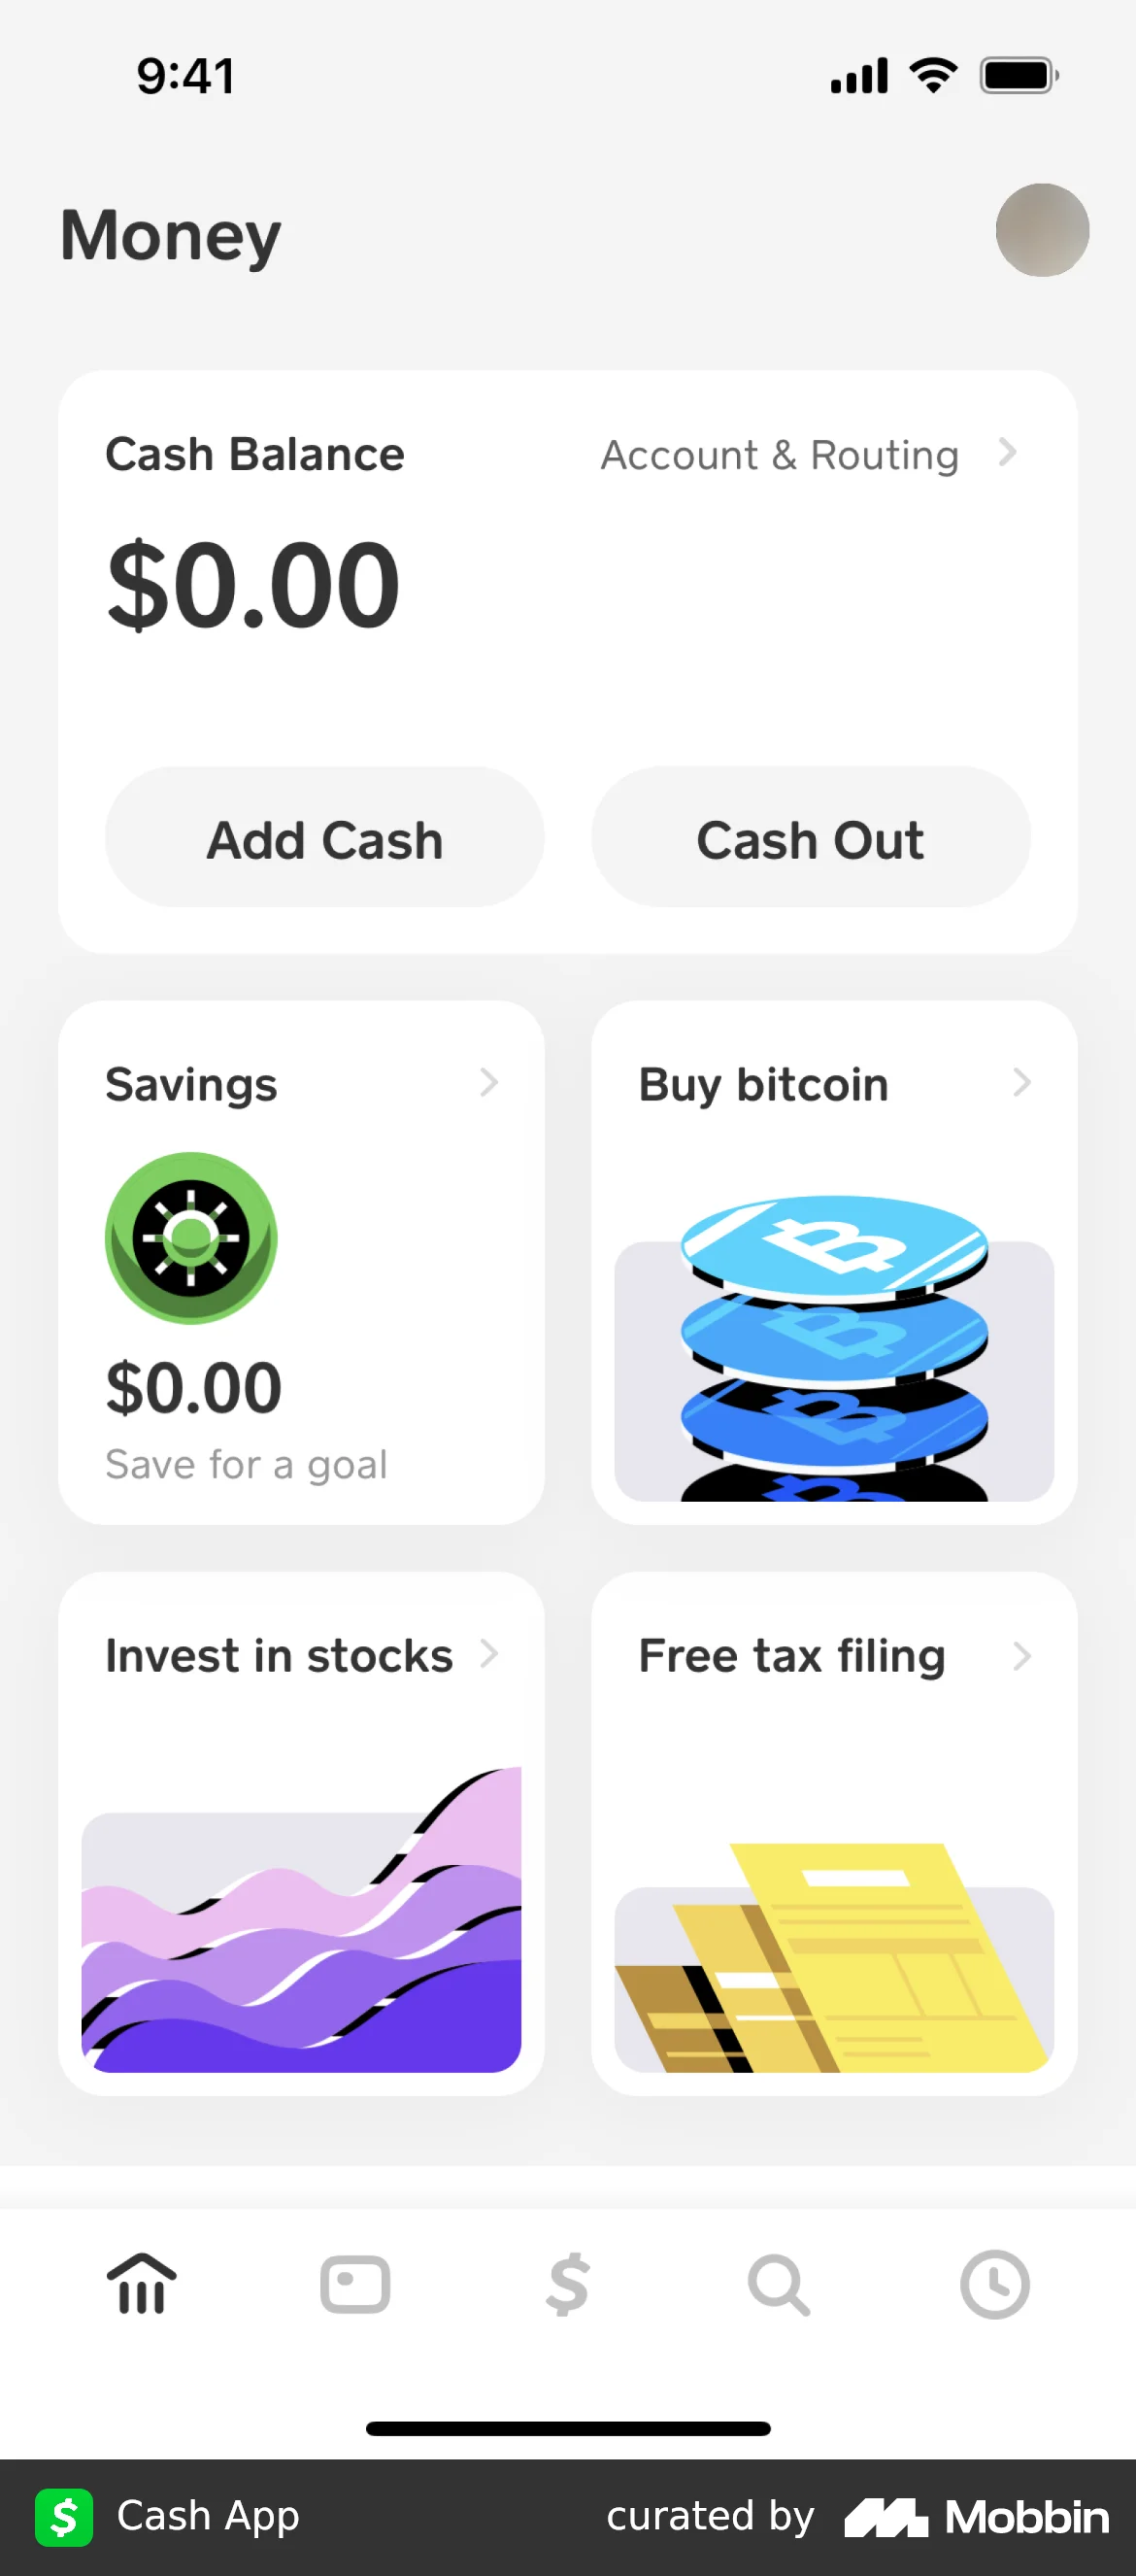 Cash App Money screen